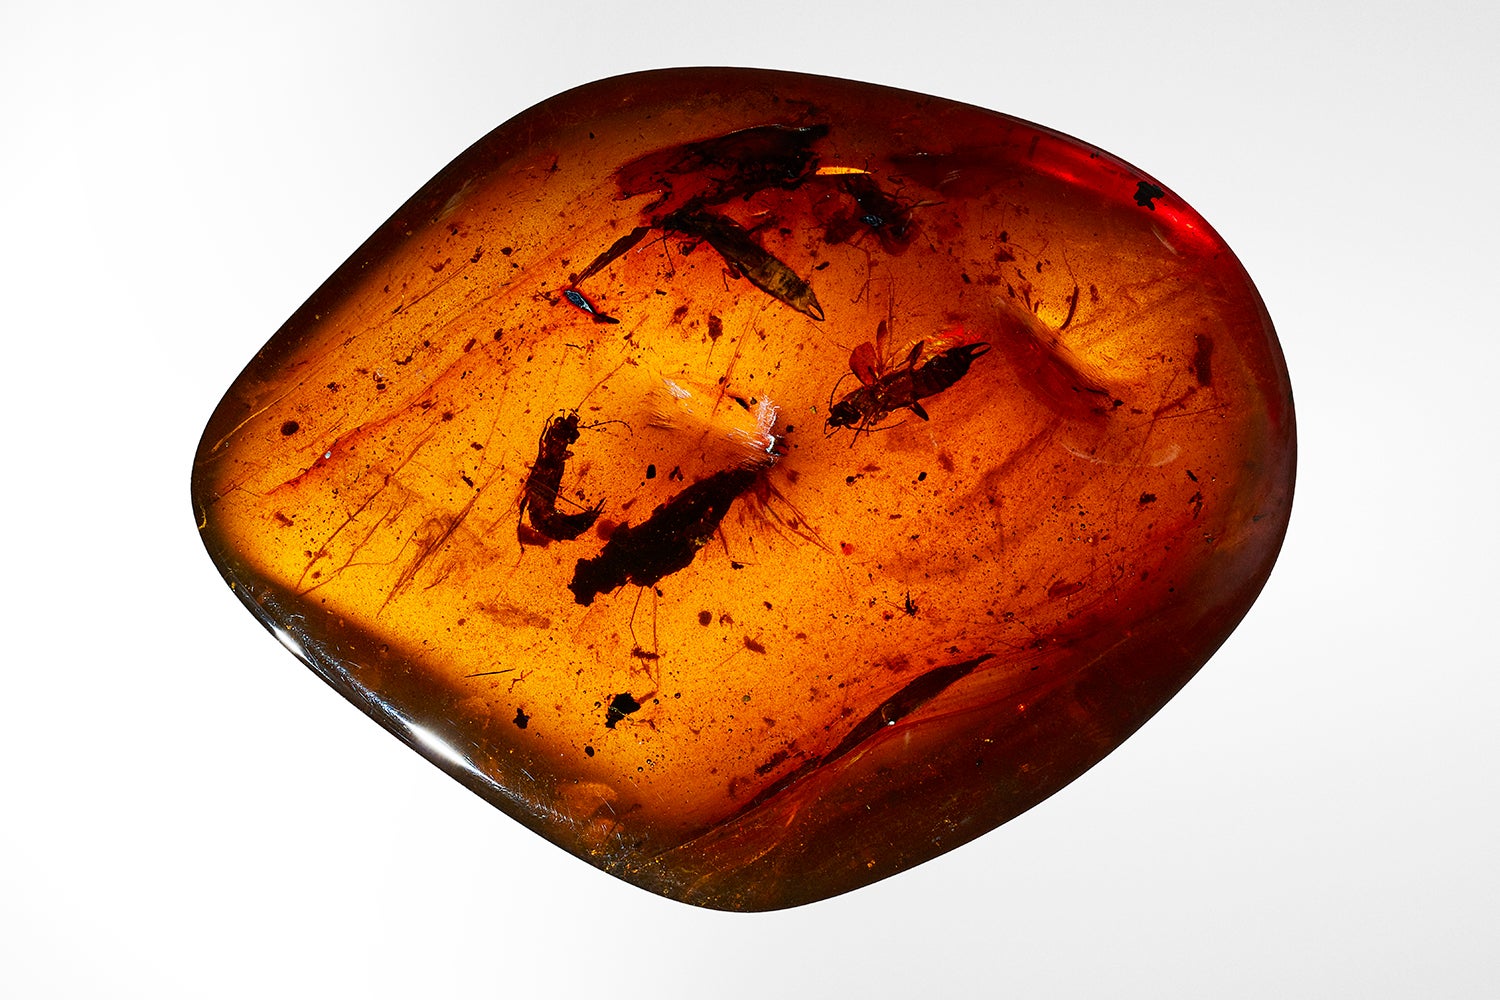 Earwig fossilized in orange amber